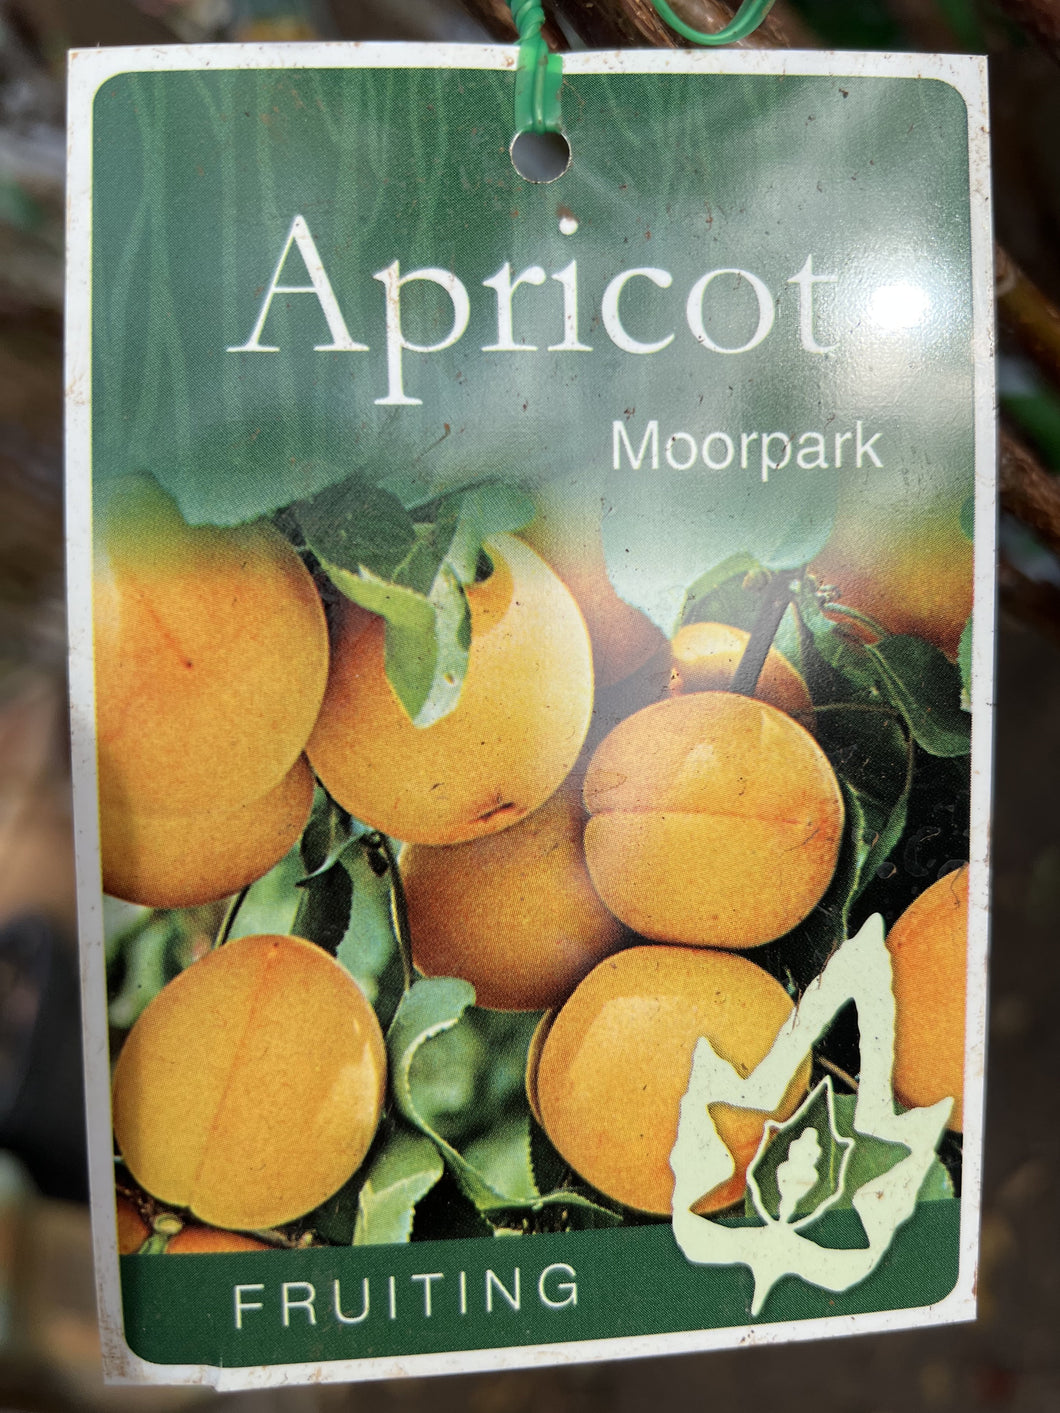 Apricot 'Moorpark'